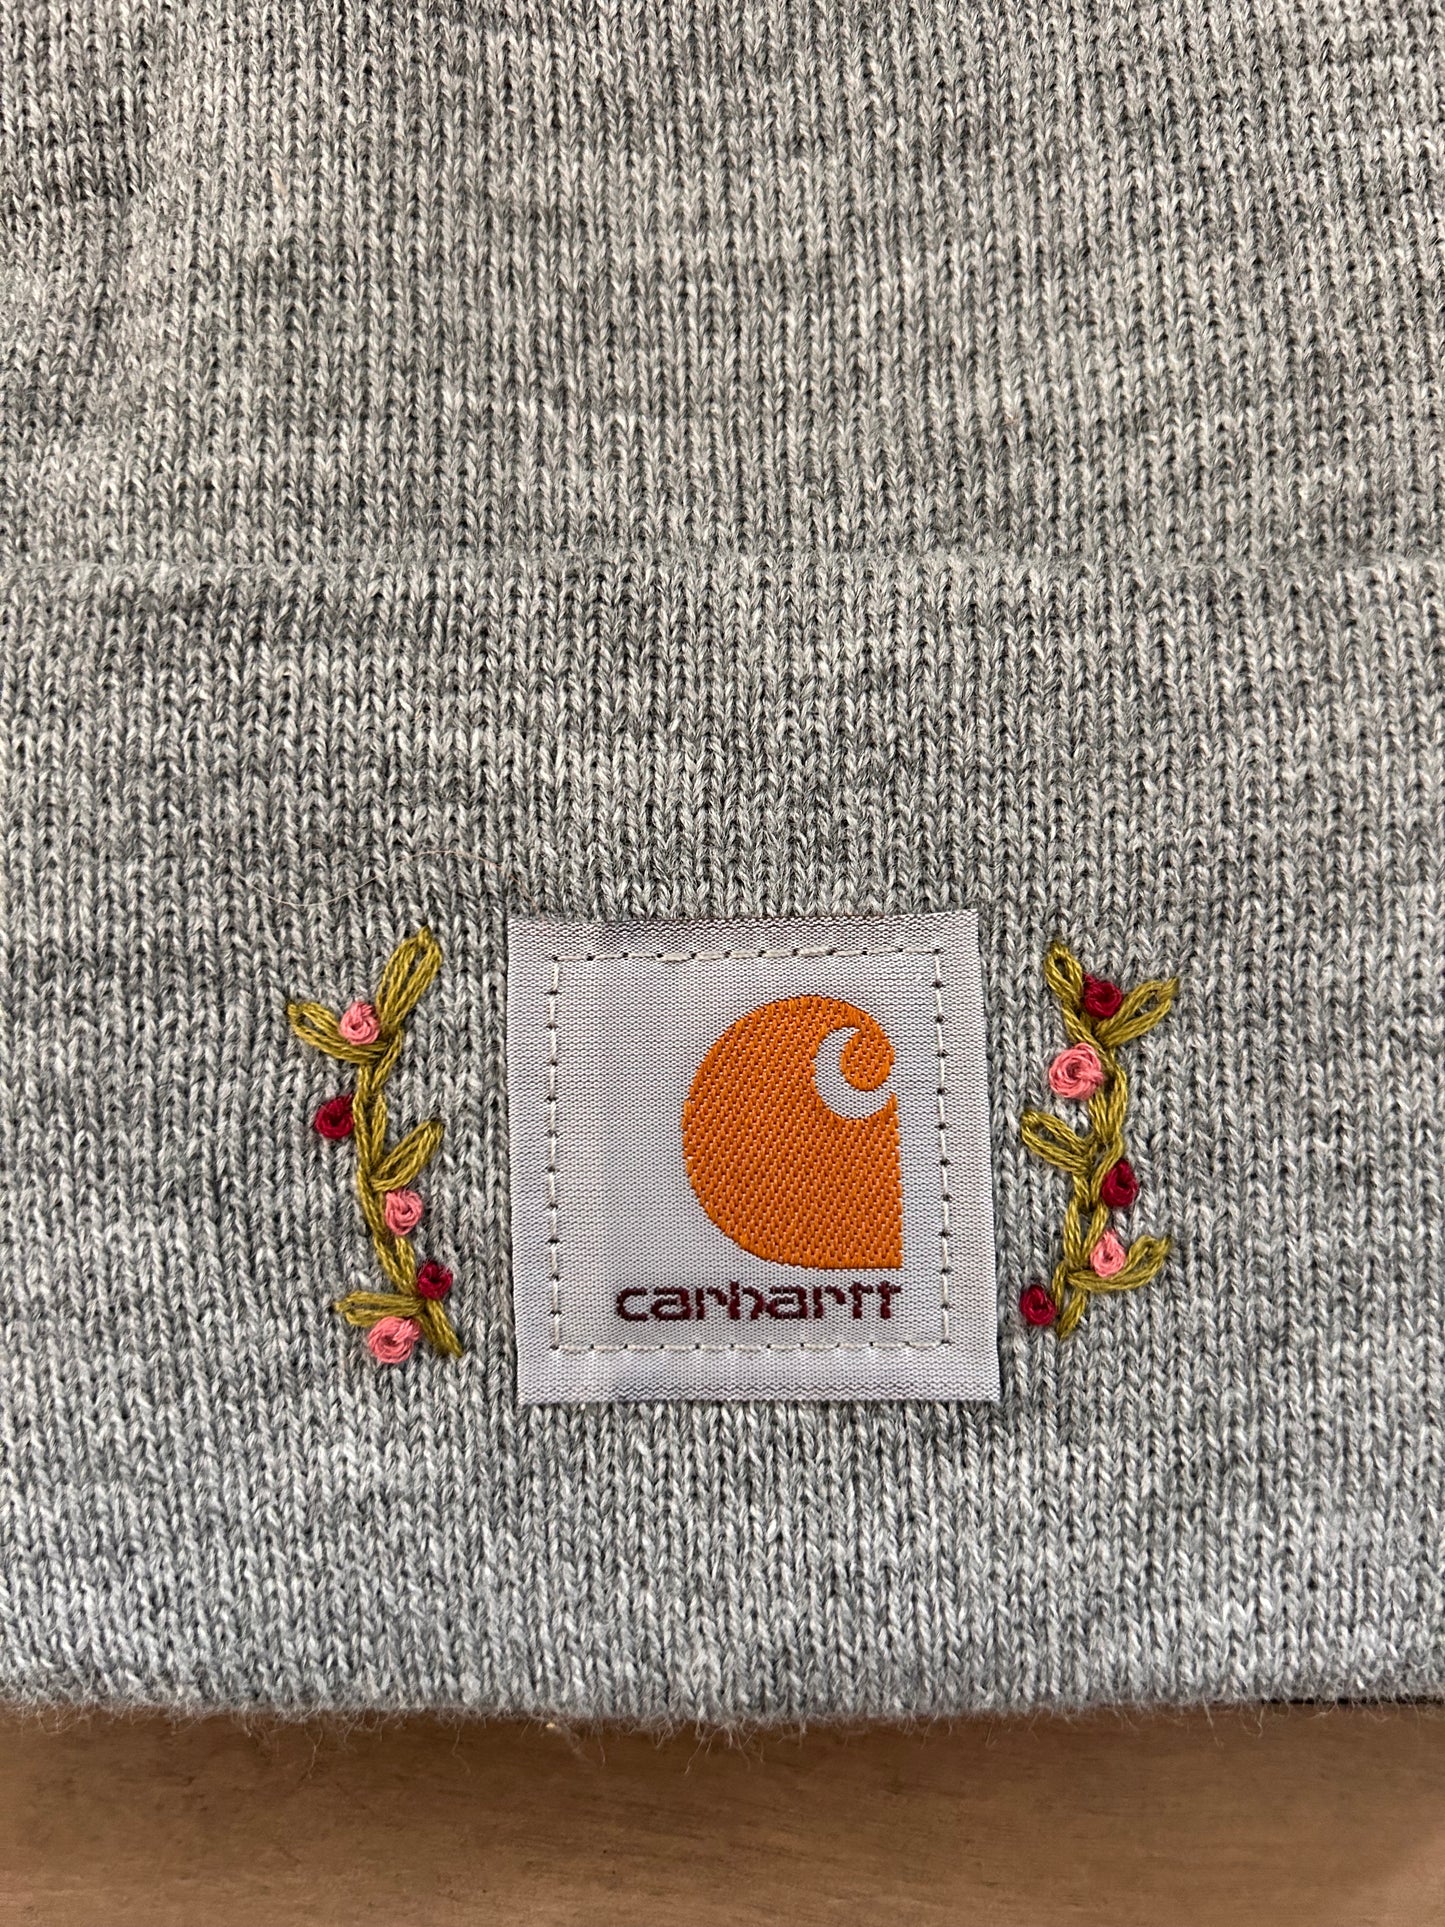 Embroidered Carhartt Beanie - Light Gray